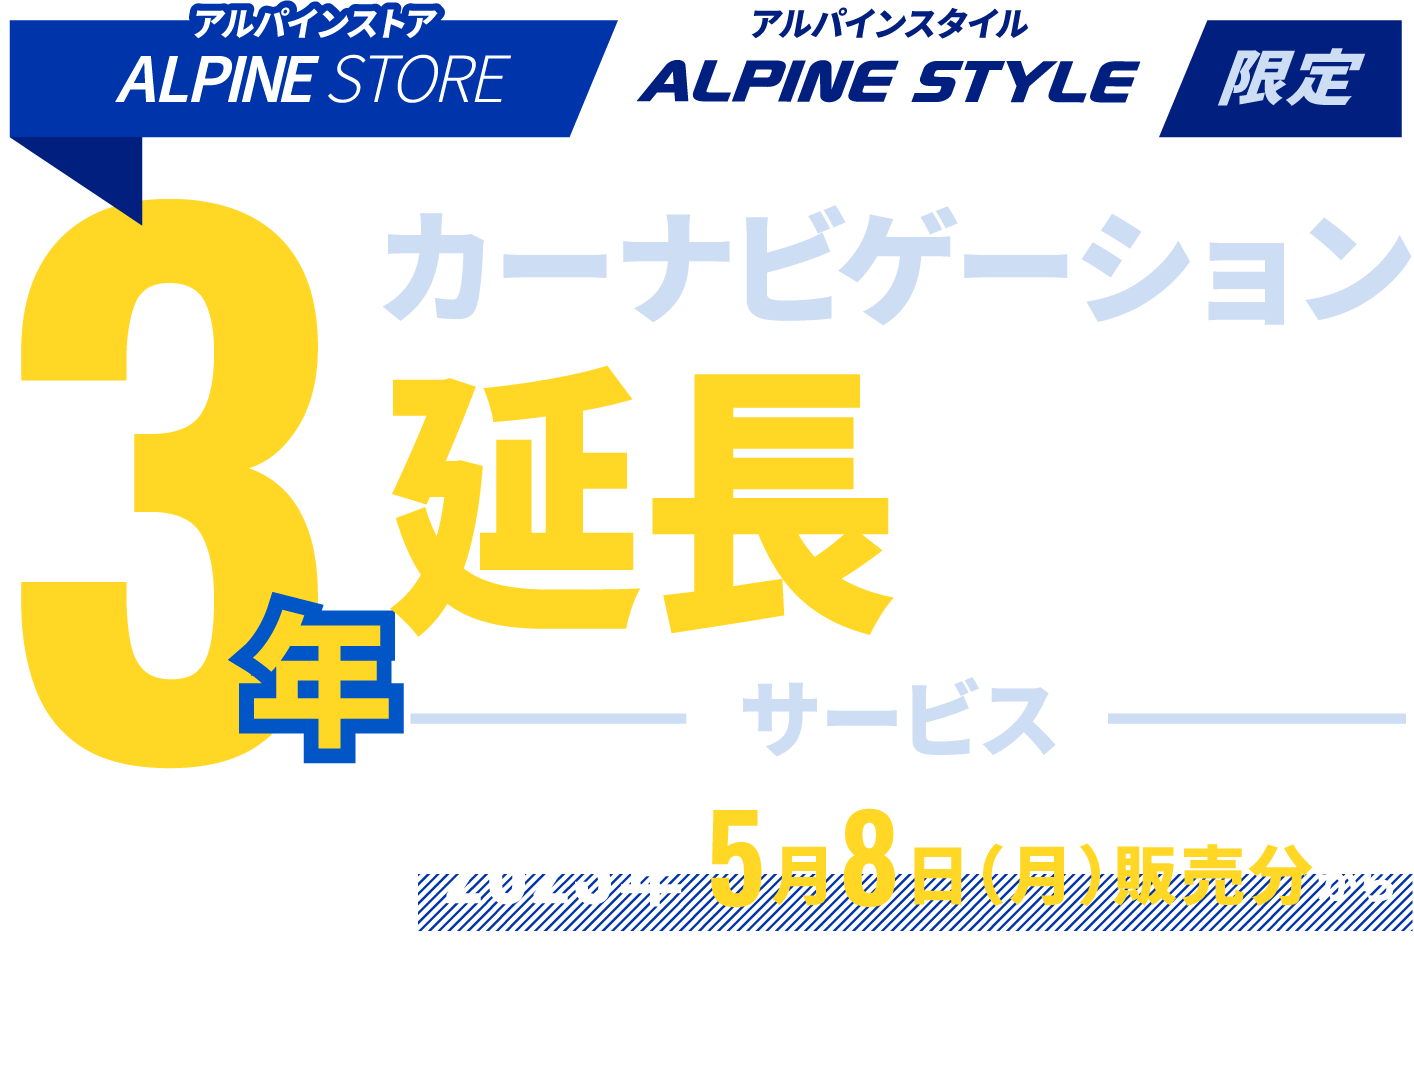 ALPINE STORE / ALPINE STYLE 限定 カーナビゲーション3年延長保証サービス │ サービス開始 2023年5月8日（月）販売分から ※アルパインストアは、5月8日（月）出荷分【4月27日（木）注文分】からが対象となります。※アルパインスタイル店舗は5月6日（土）朝10時以降のご注文分が対象となります。